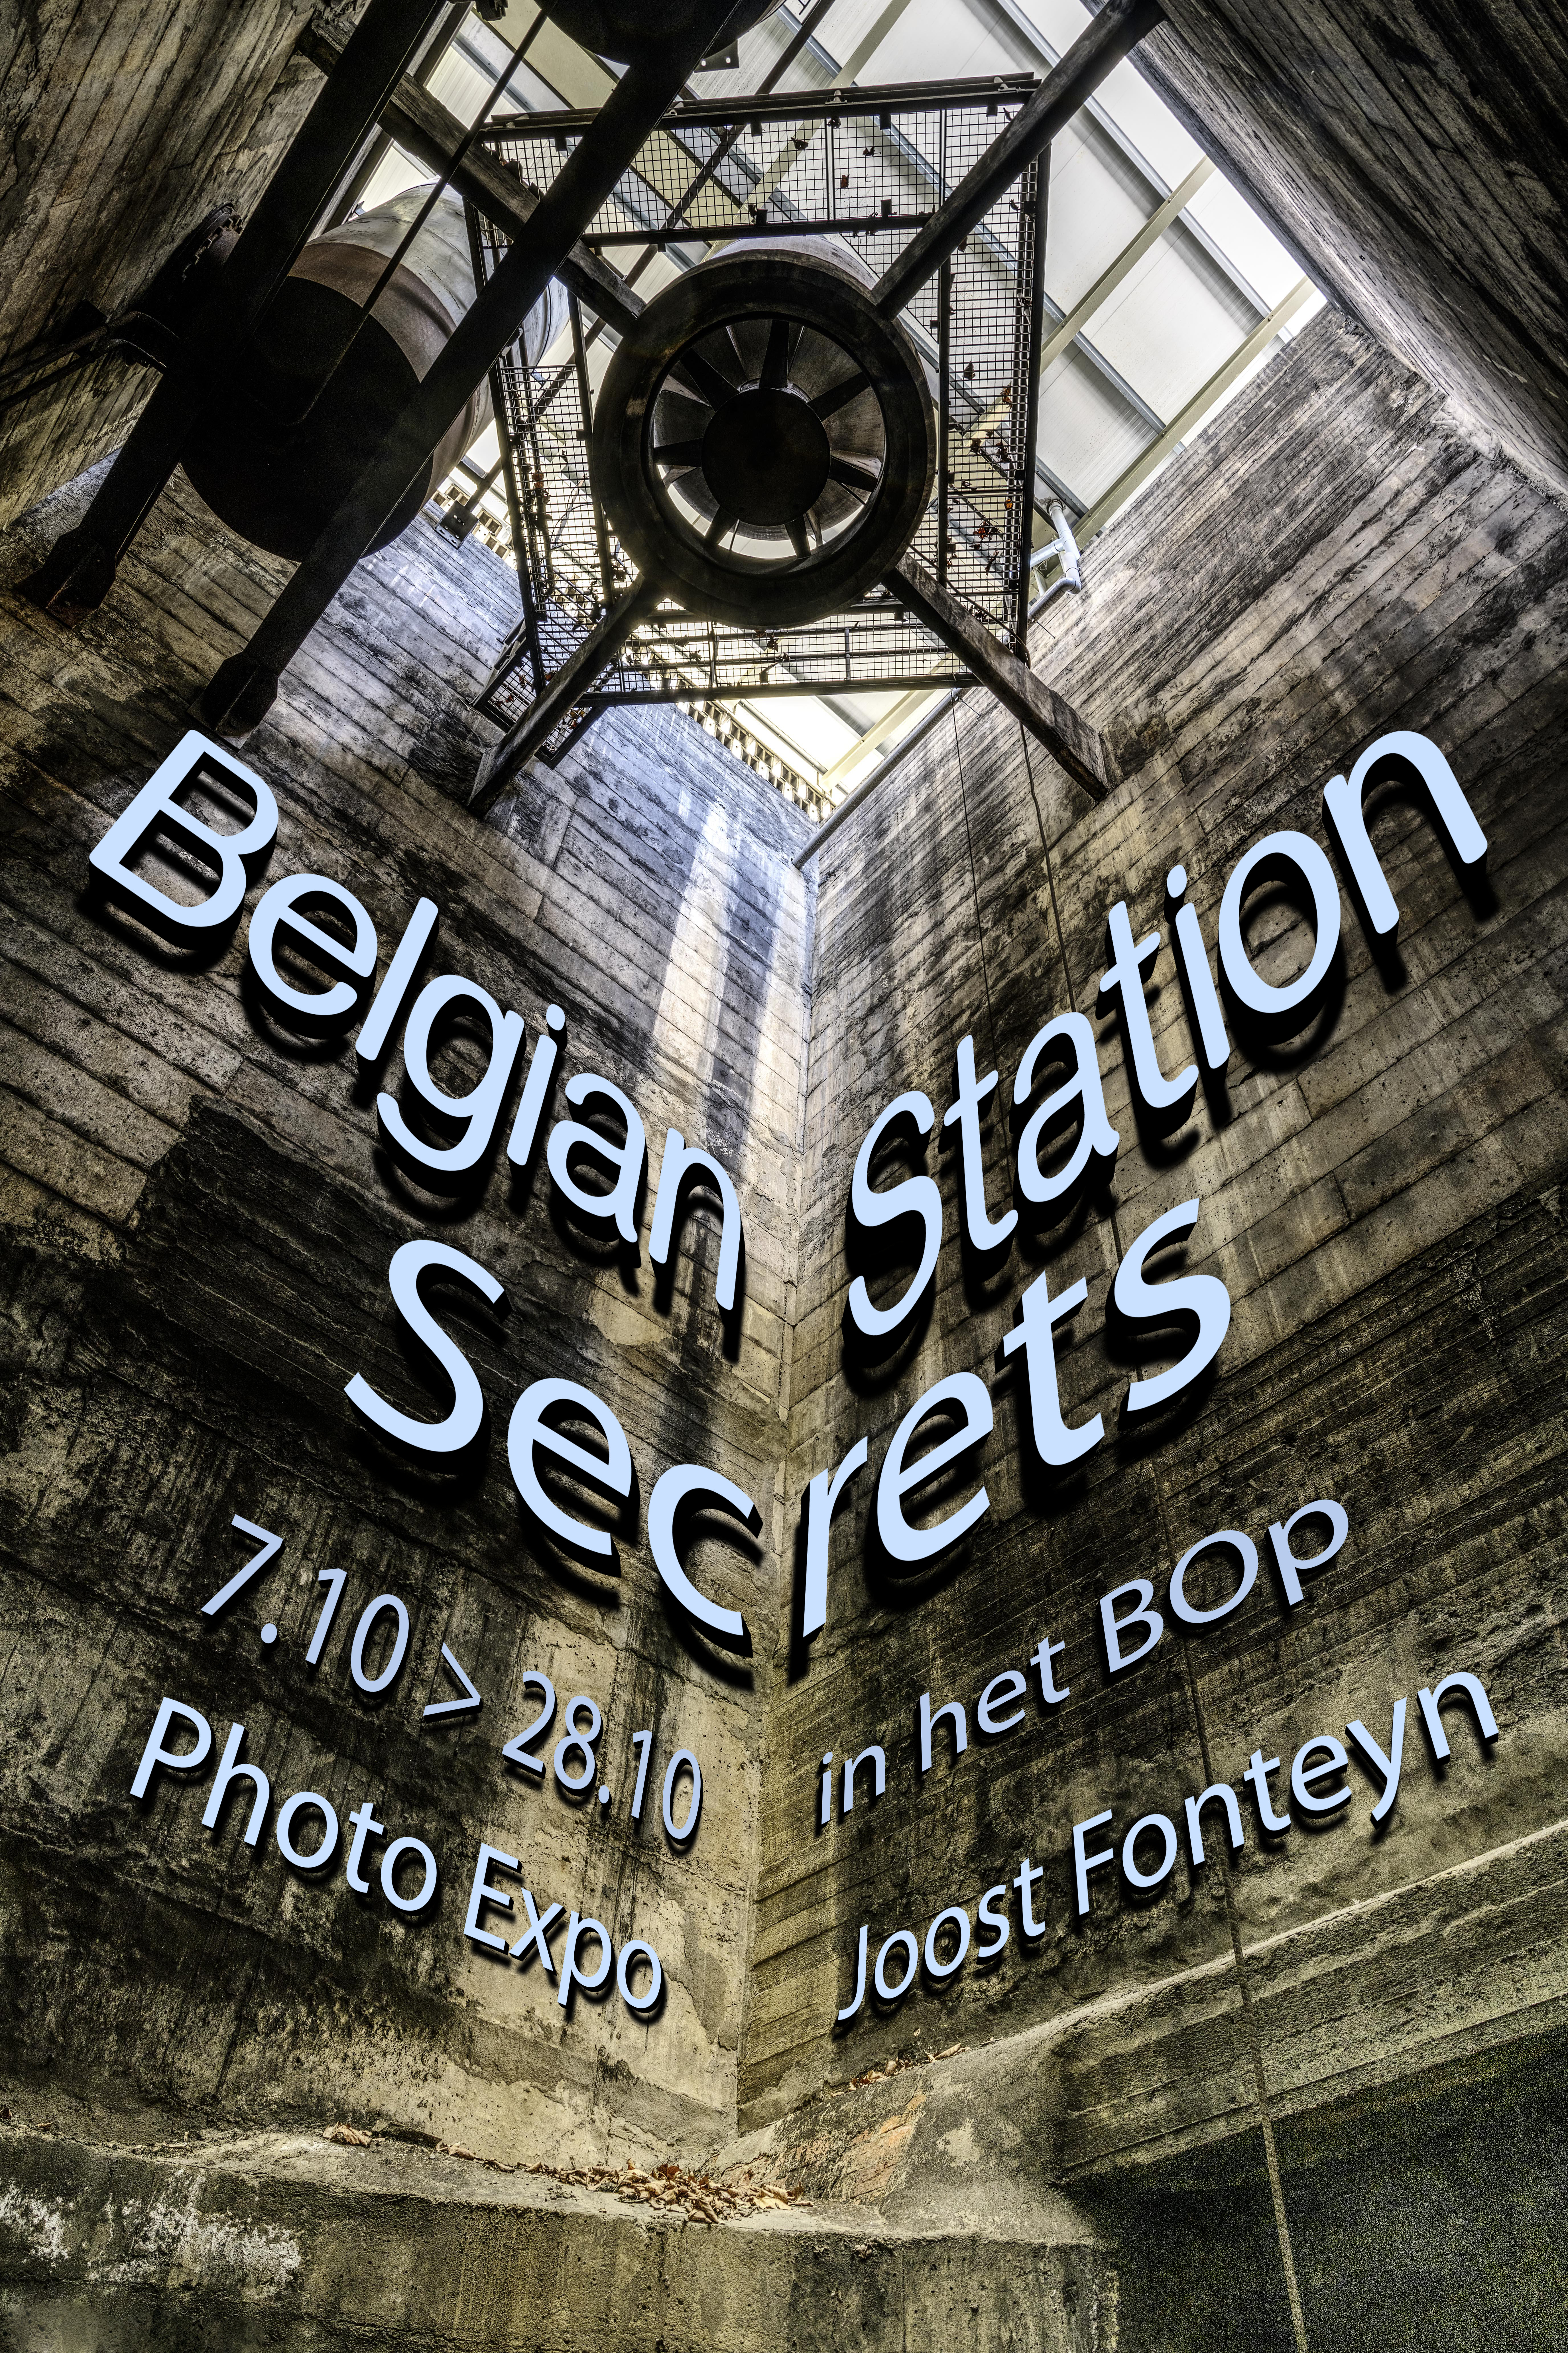 Expo Belgian Station Secrets - BOp